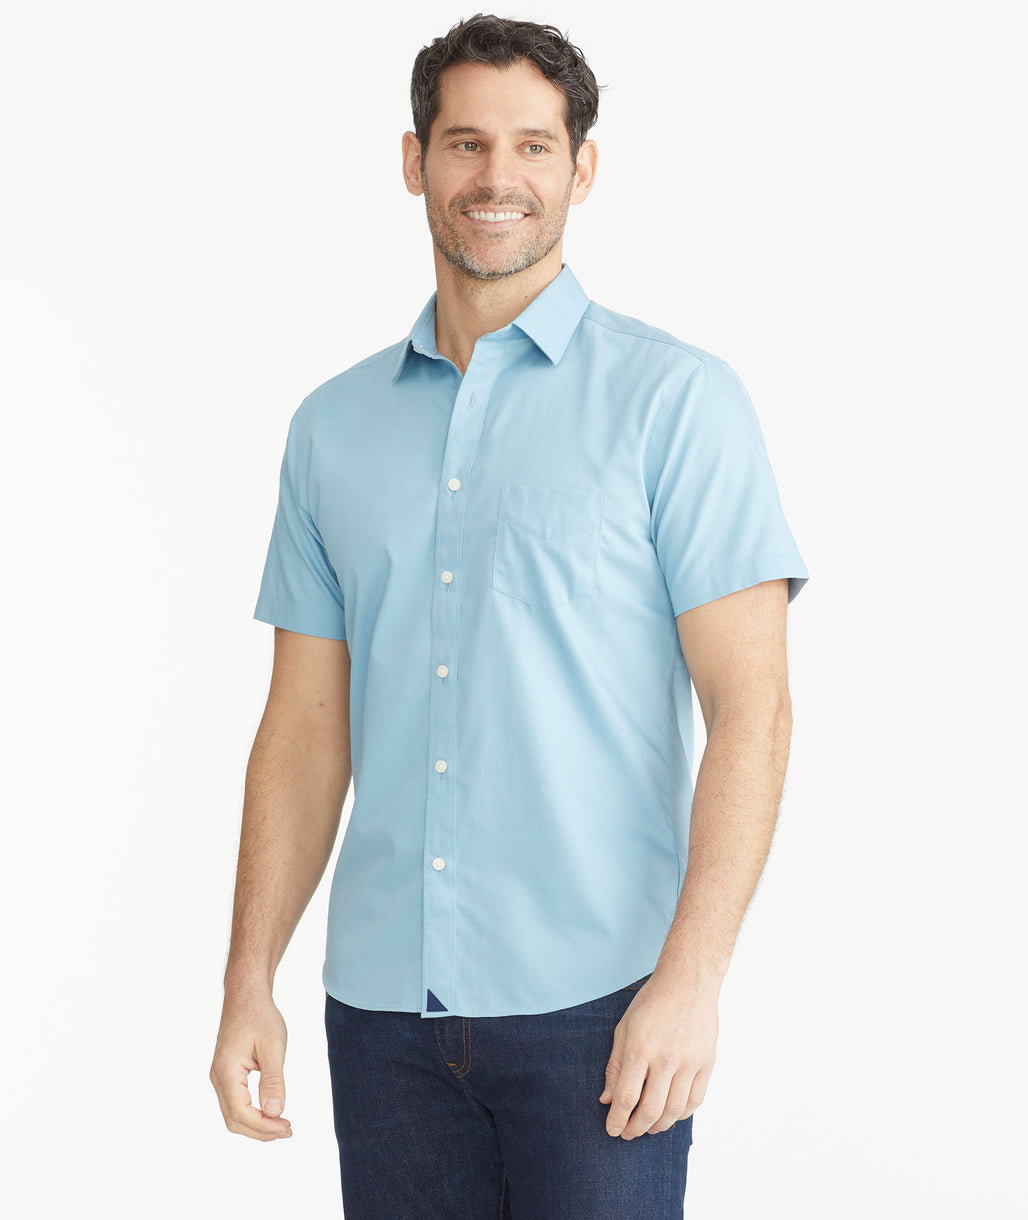 Model is wearing UNTUCKit Light Blue Denim Wrinkle-Free Short-Sleeve Hargrove Shirt.